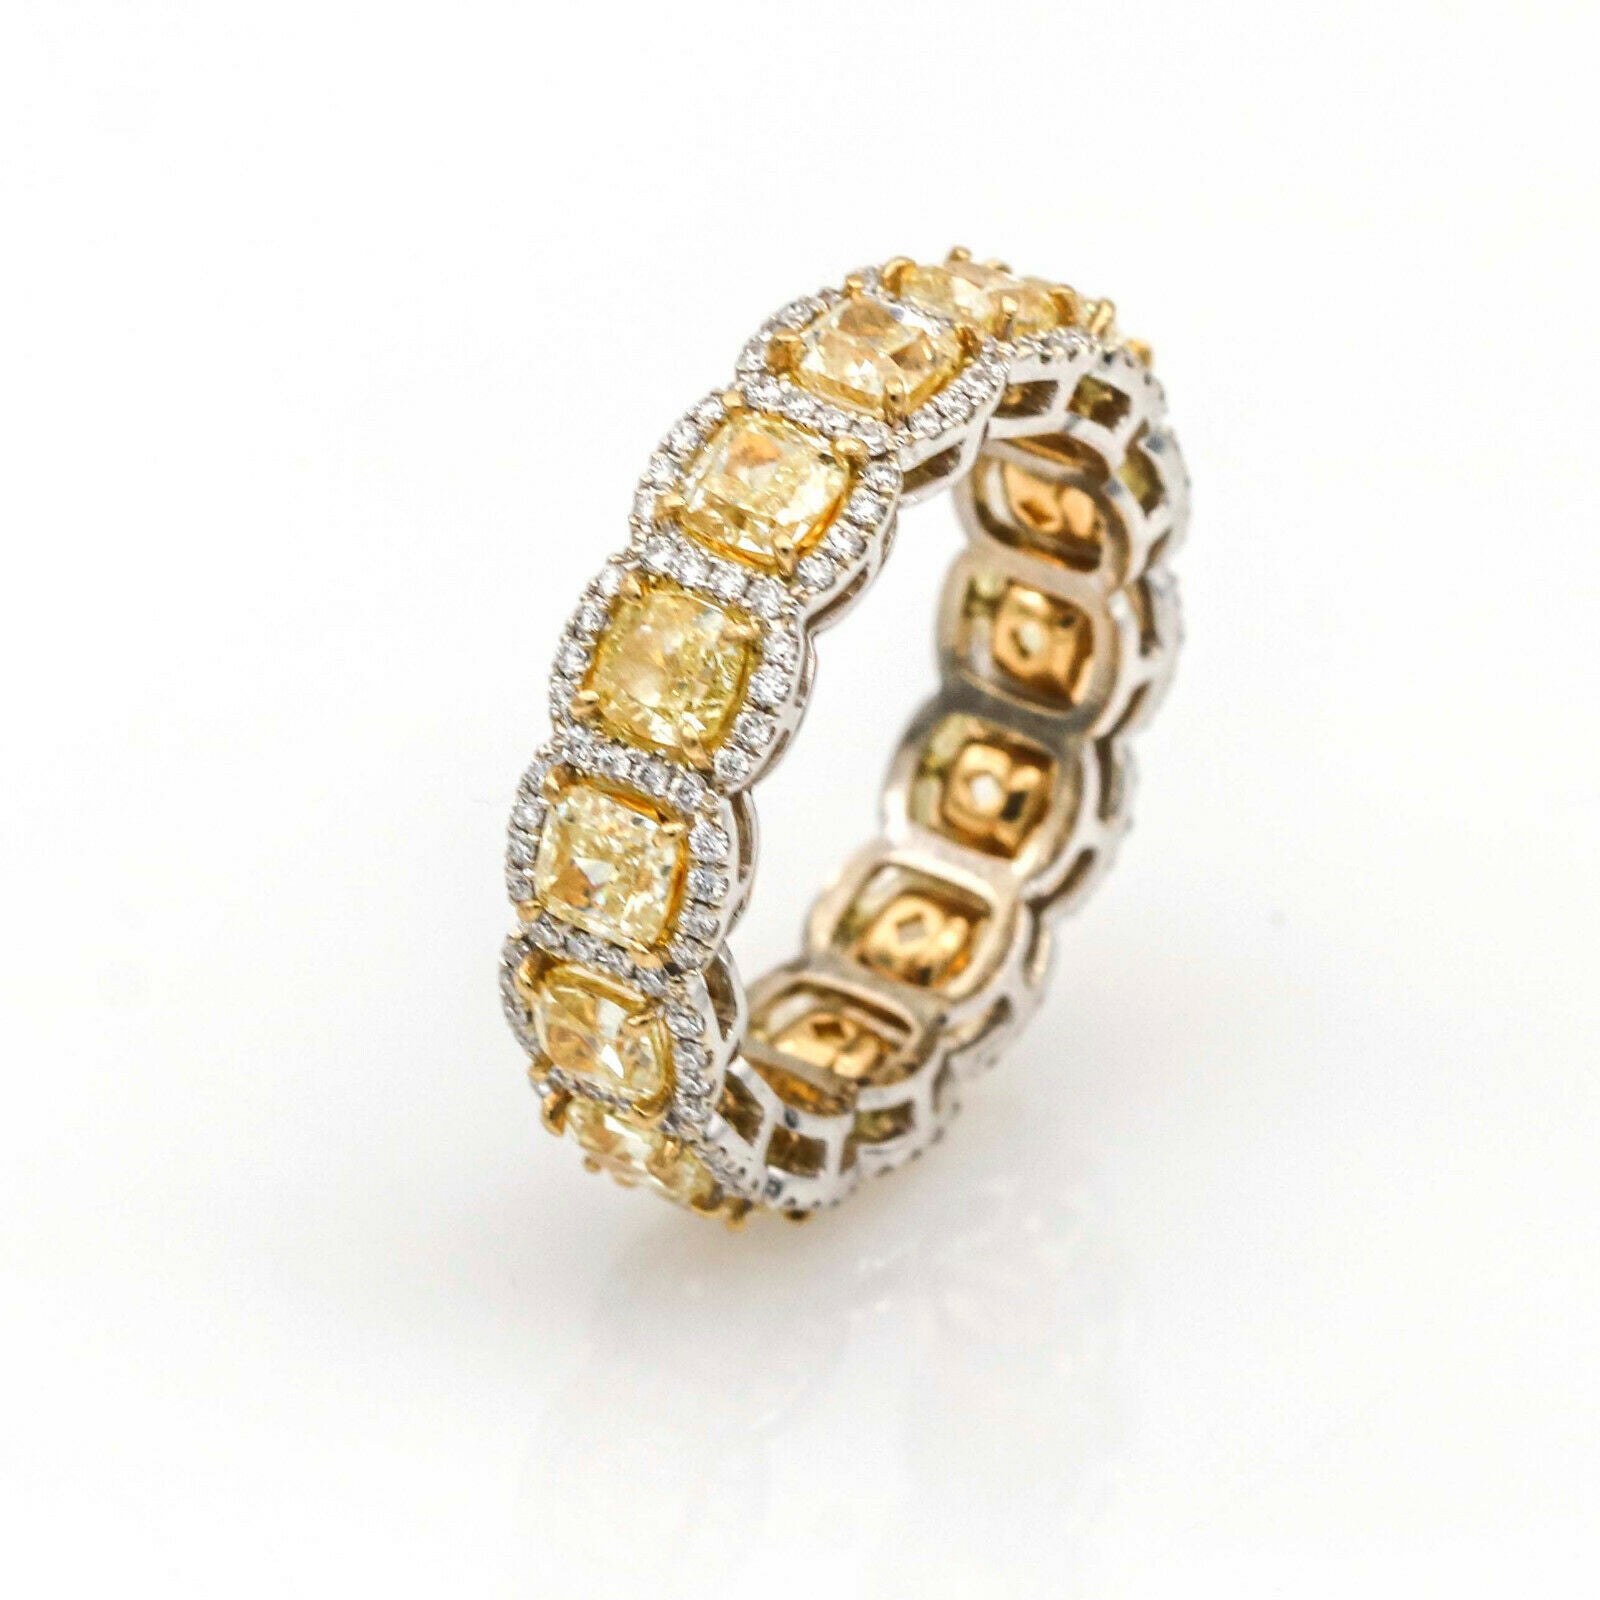 5.52 ct Fancy Yellow Diamond Eternity Band Anniversary Ring in 18k White Gold